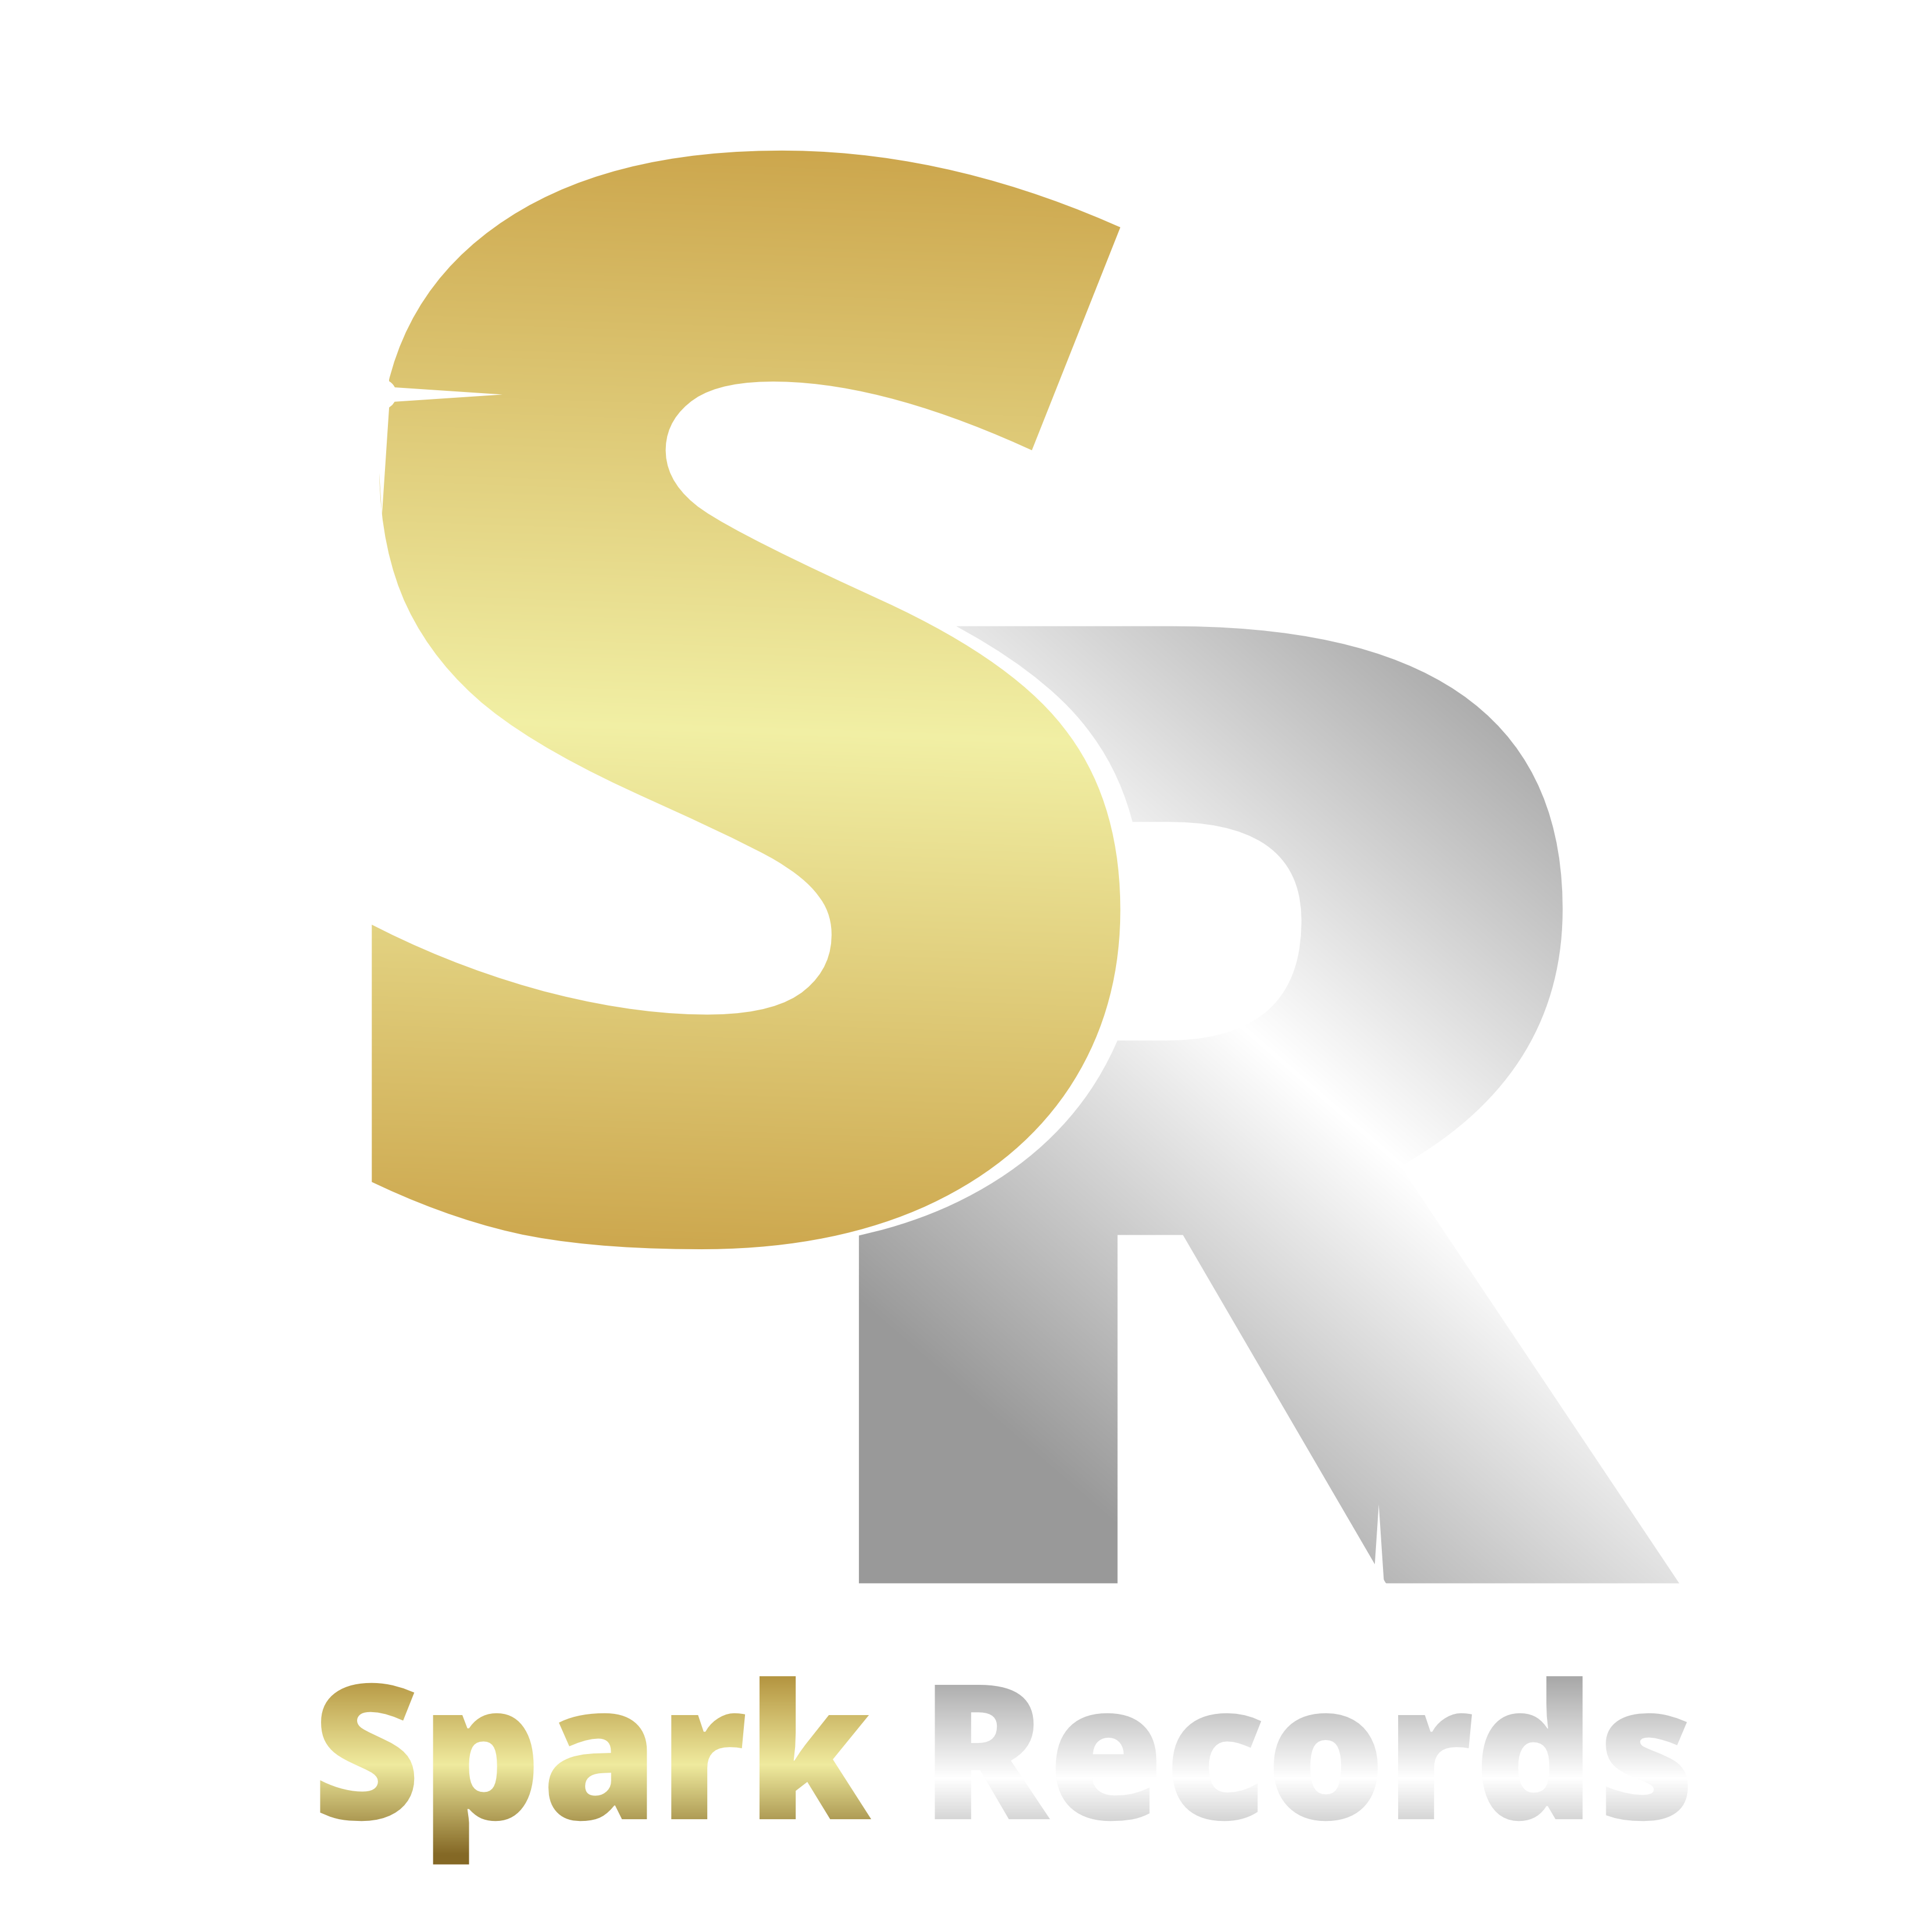 Spark Records